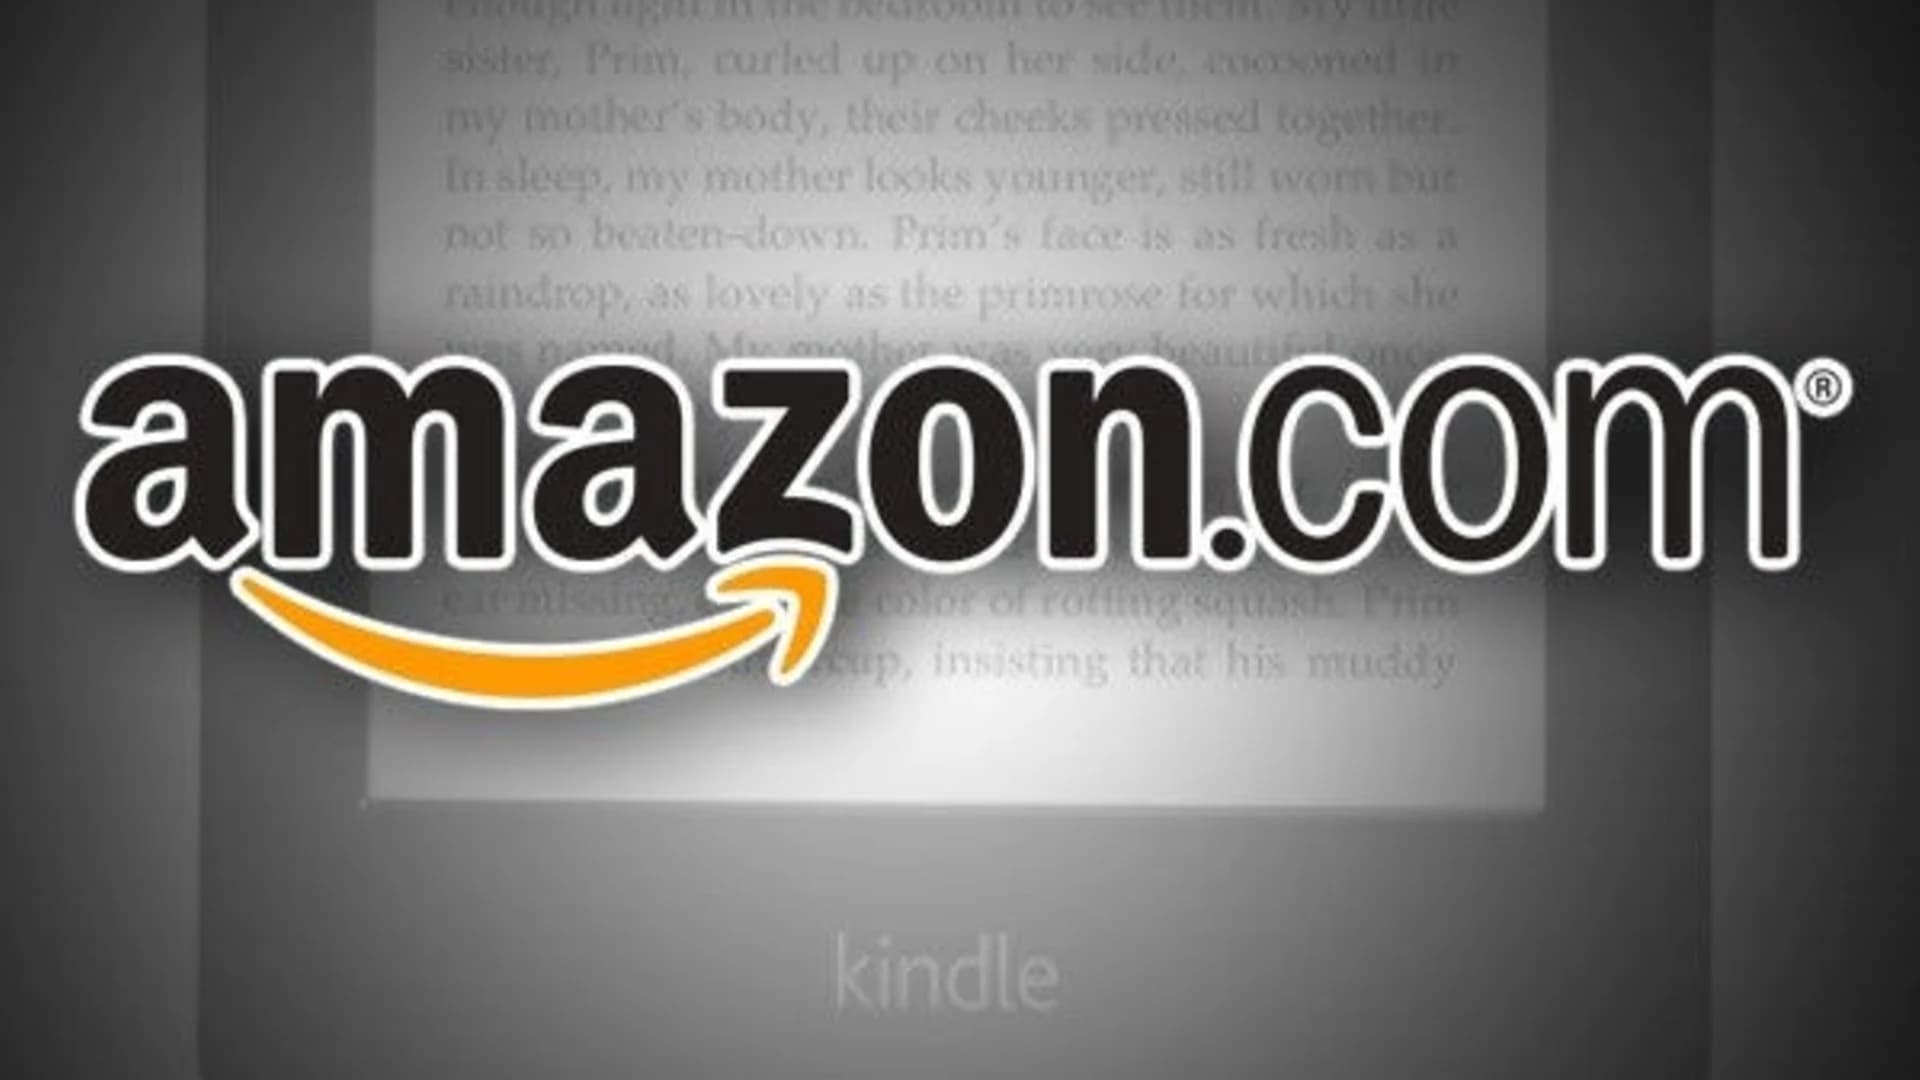 Amazon to build multimillion distribution center in North Haven